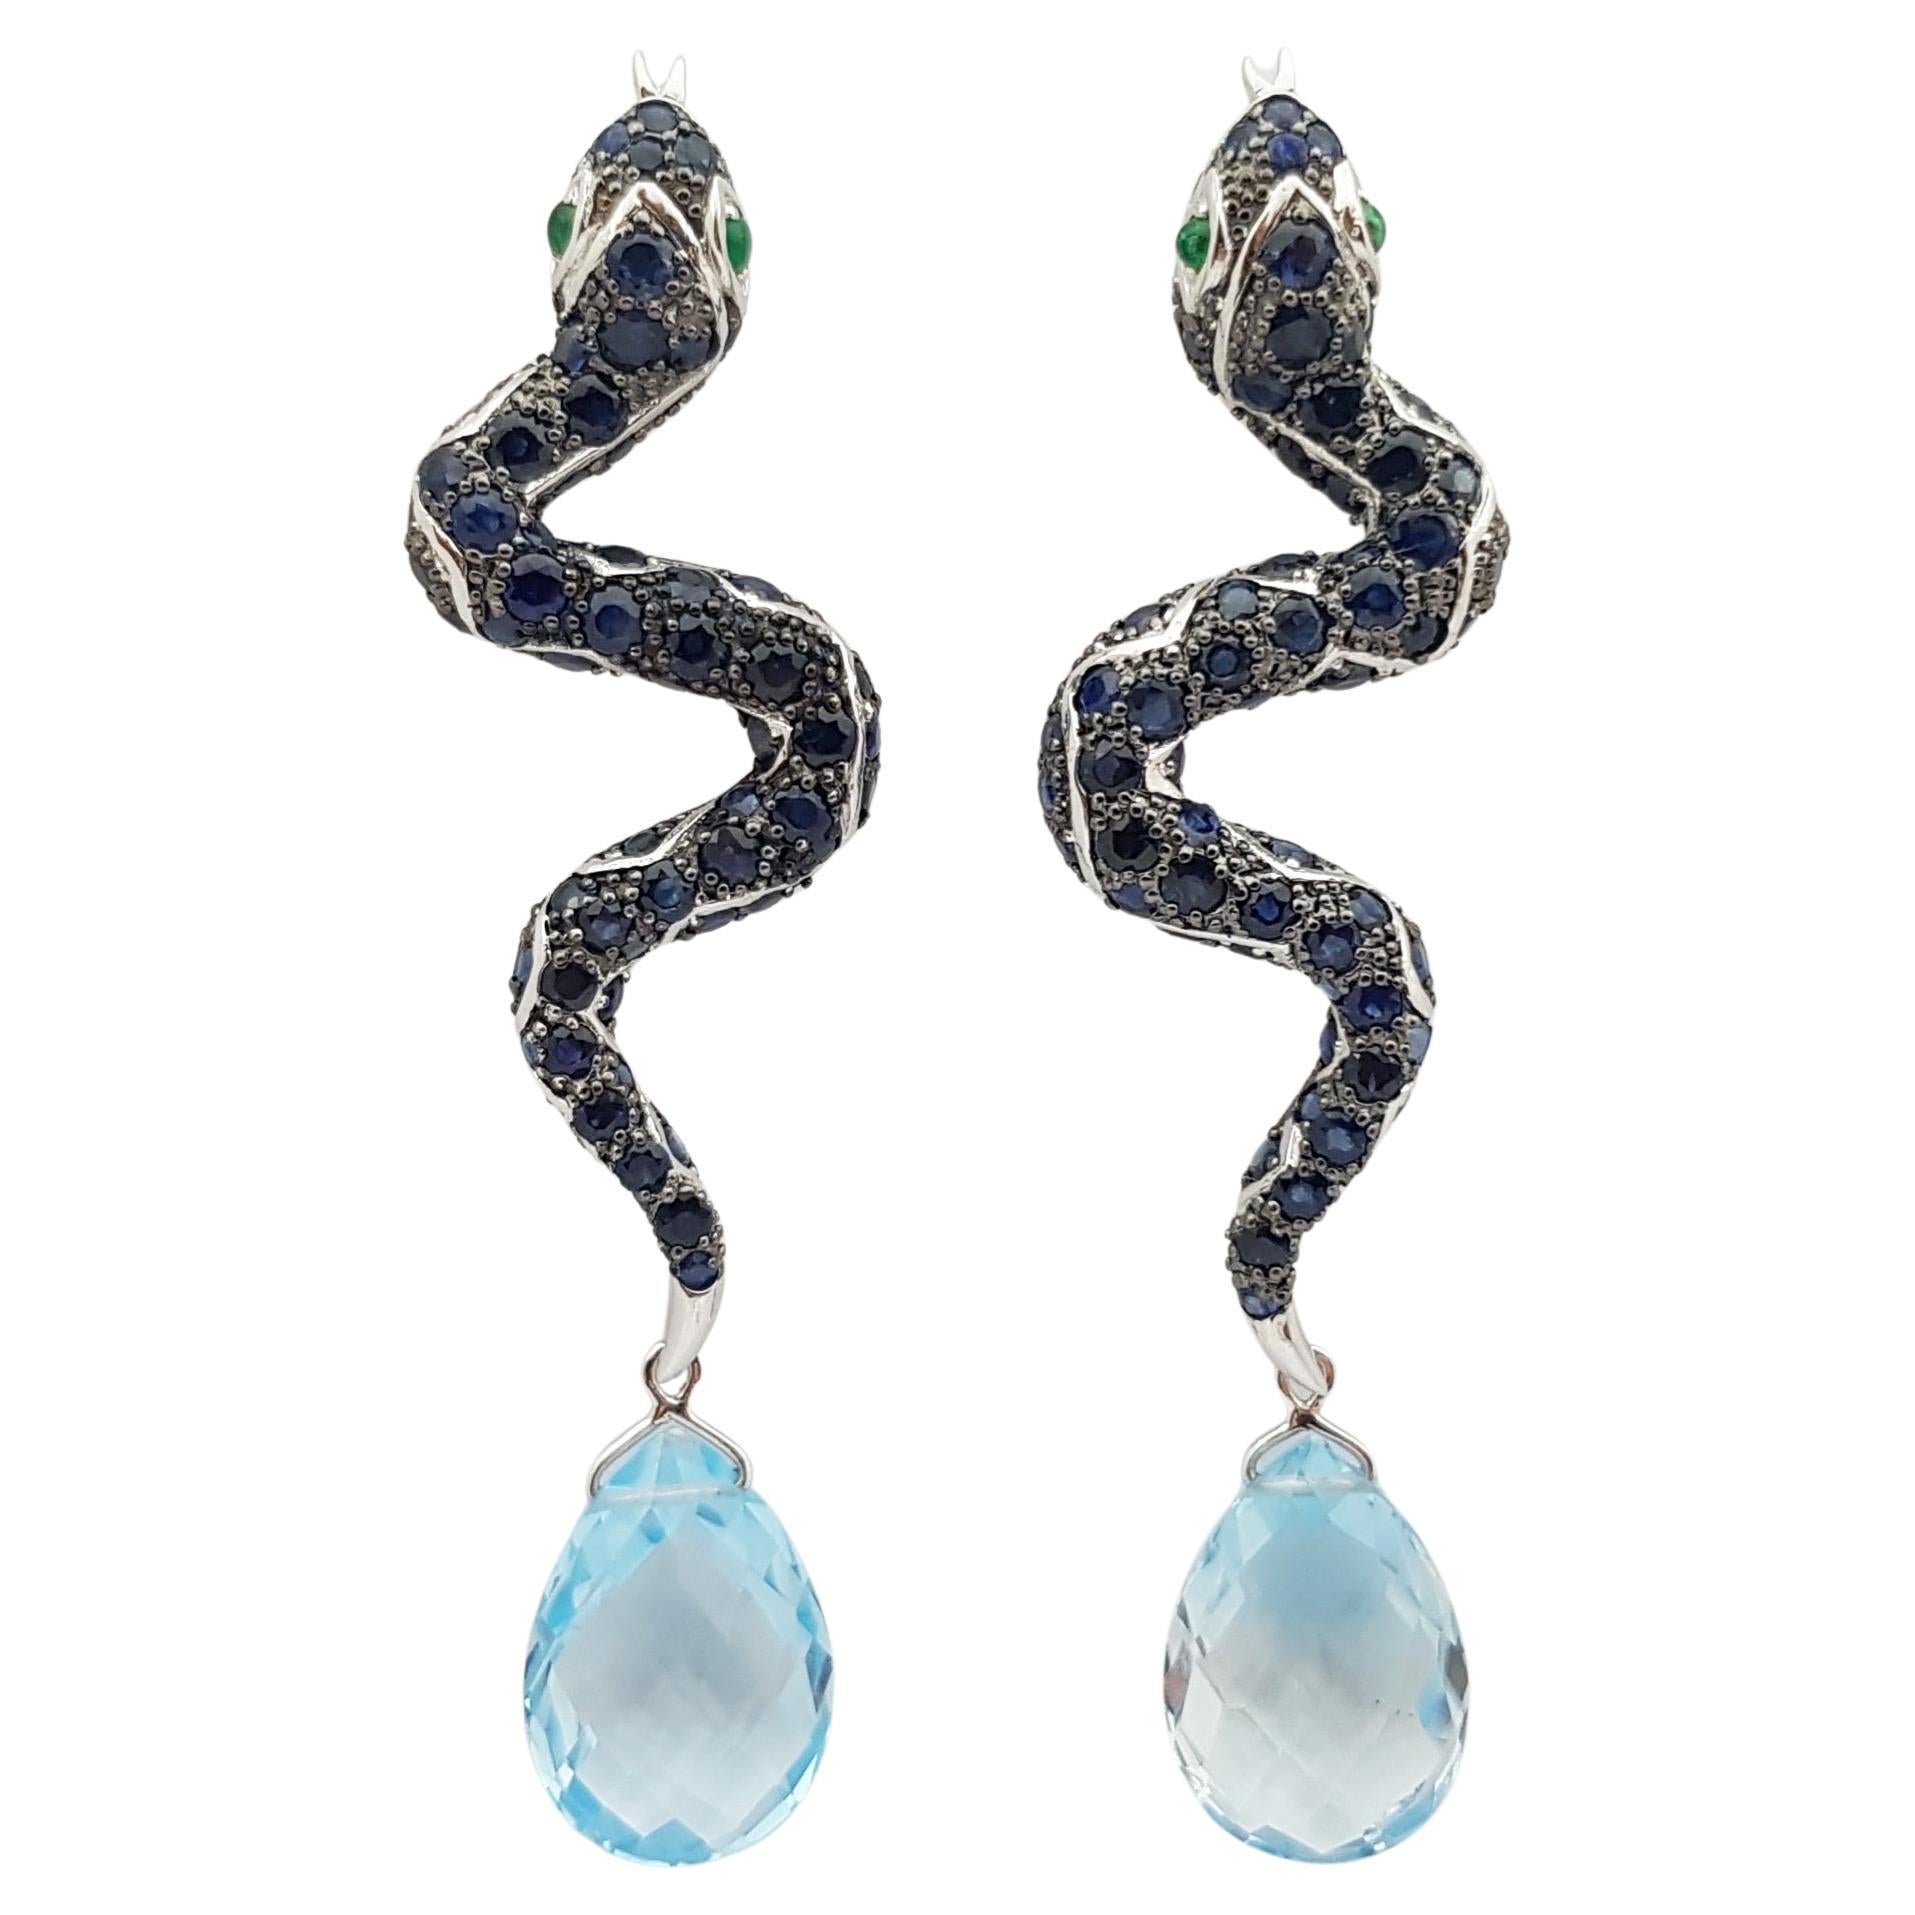 Blue Sapphire, Emerald and Blue Topaz Snake Earrings set in Silver Settings